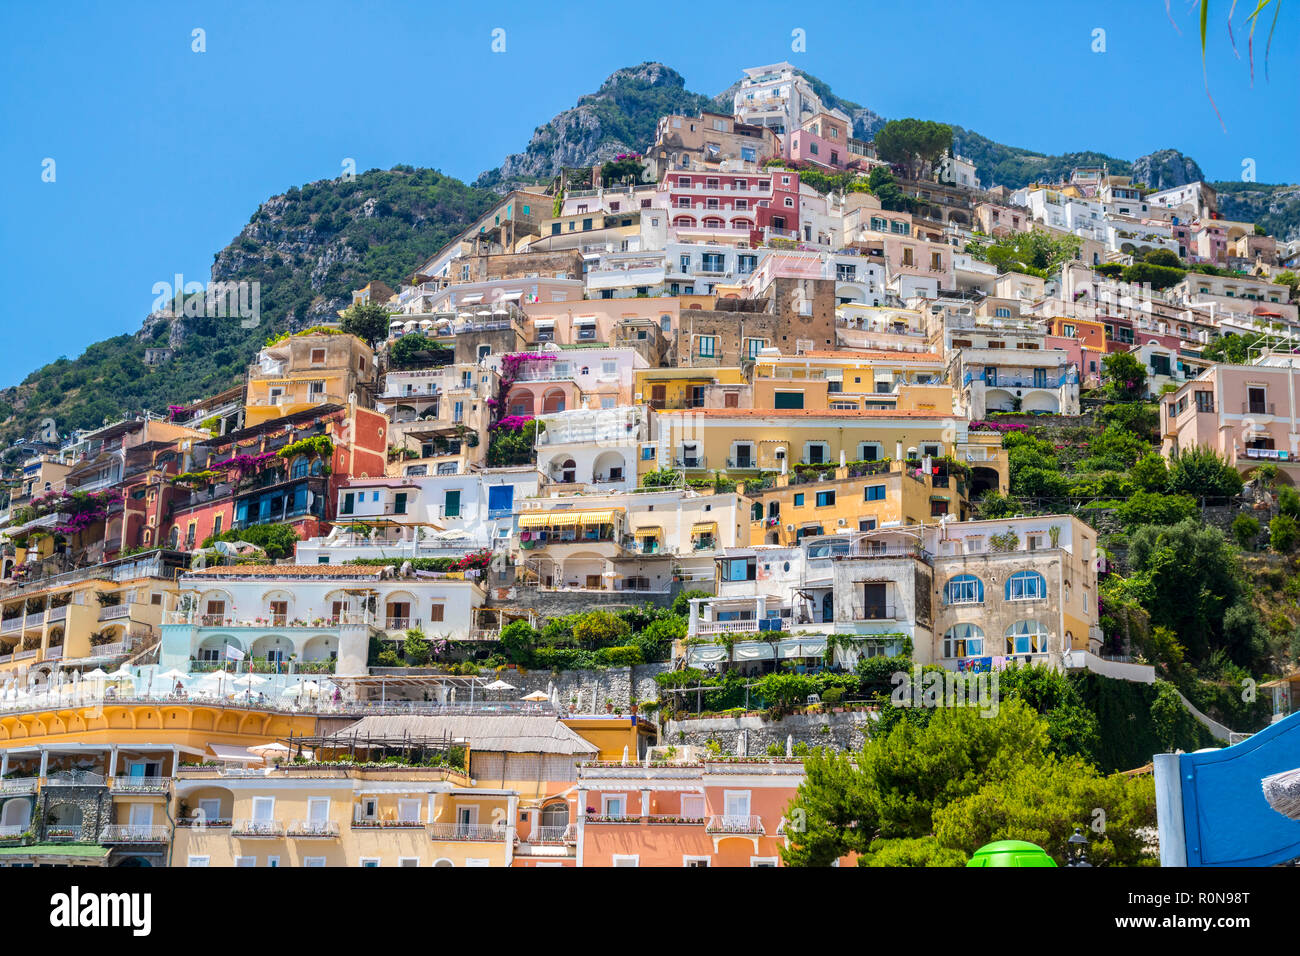 Stunning mountainside town, positano italy, colourful, iconic, Italian concept, top destination europe, must see, cliff, amazing amalfi coast Stock Photo